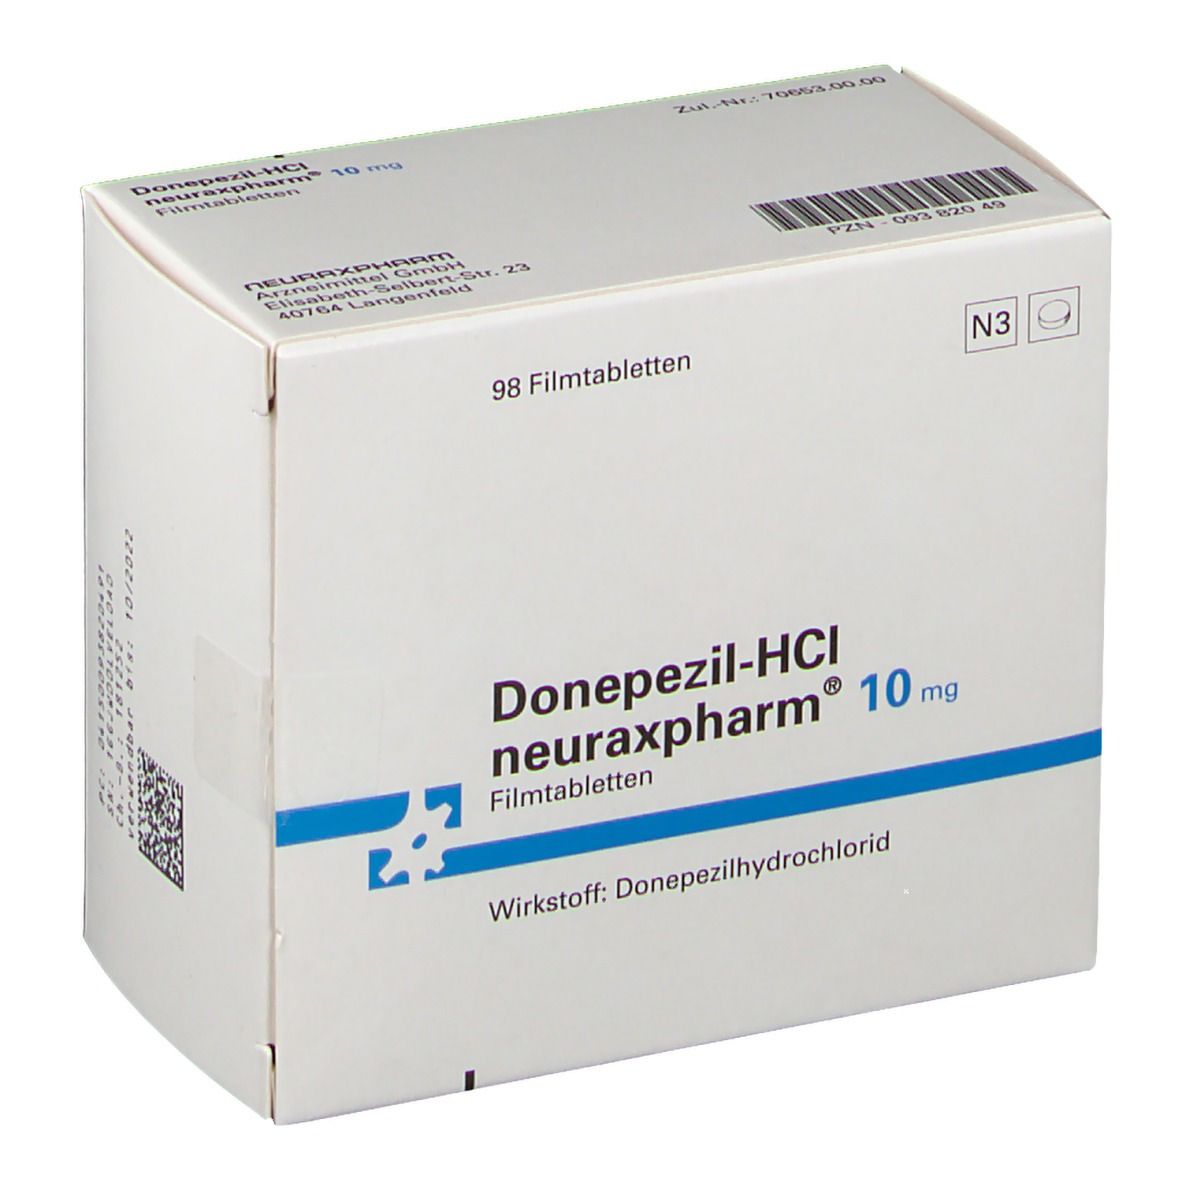 Donepezil-HCl neuraxpharm® 10 mg